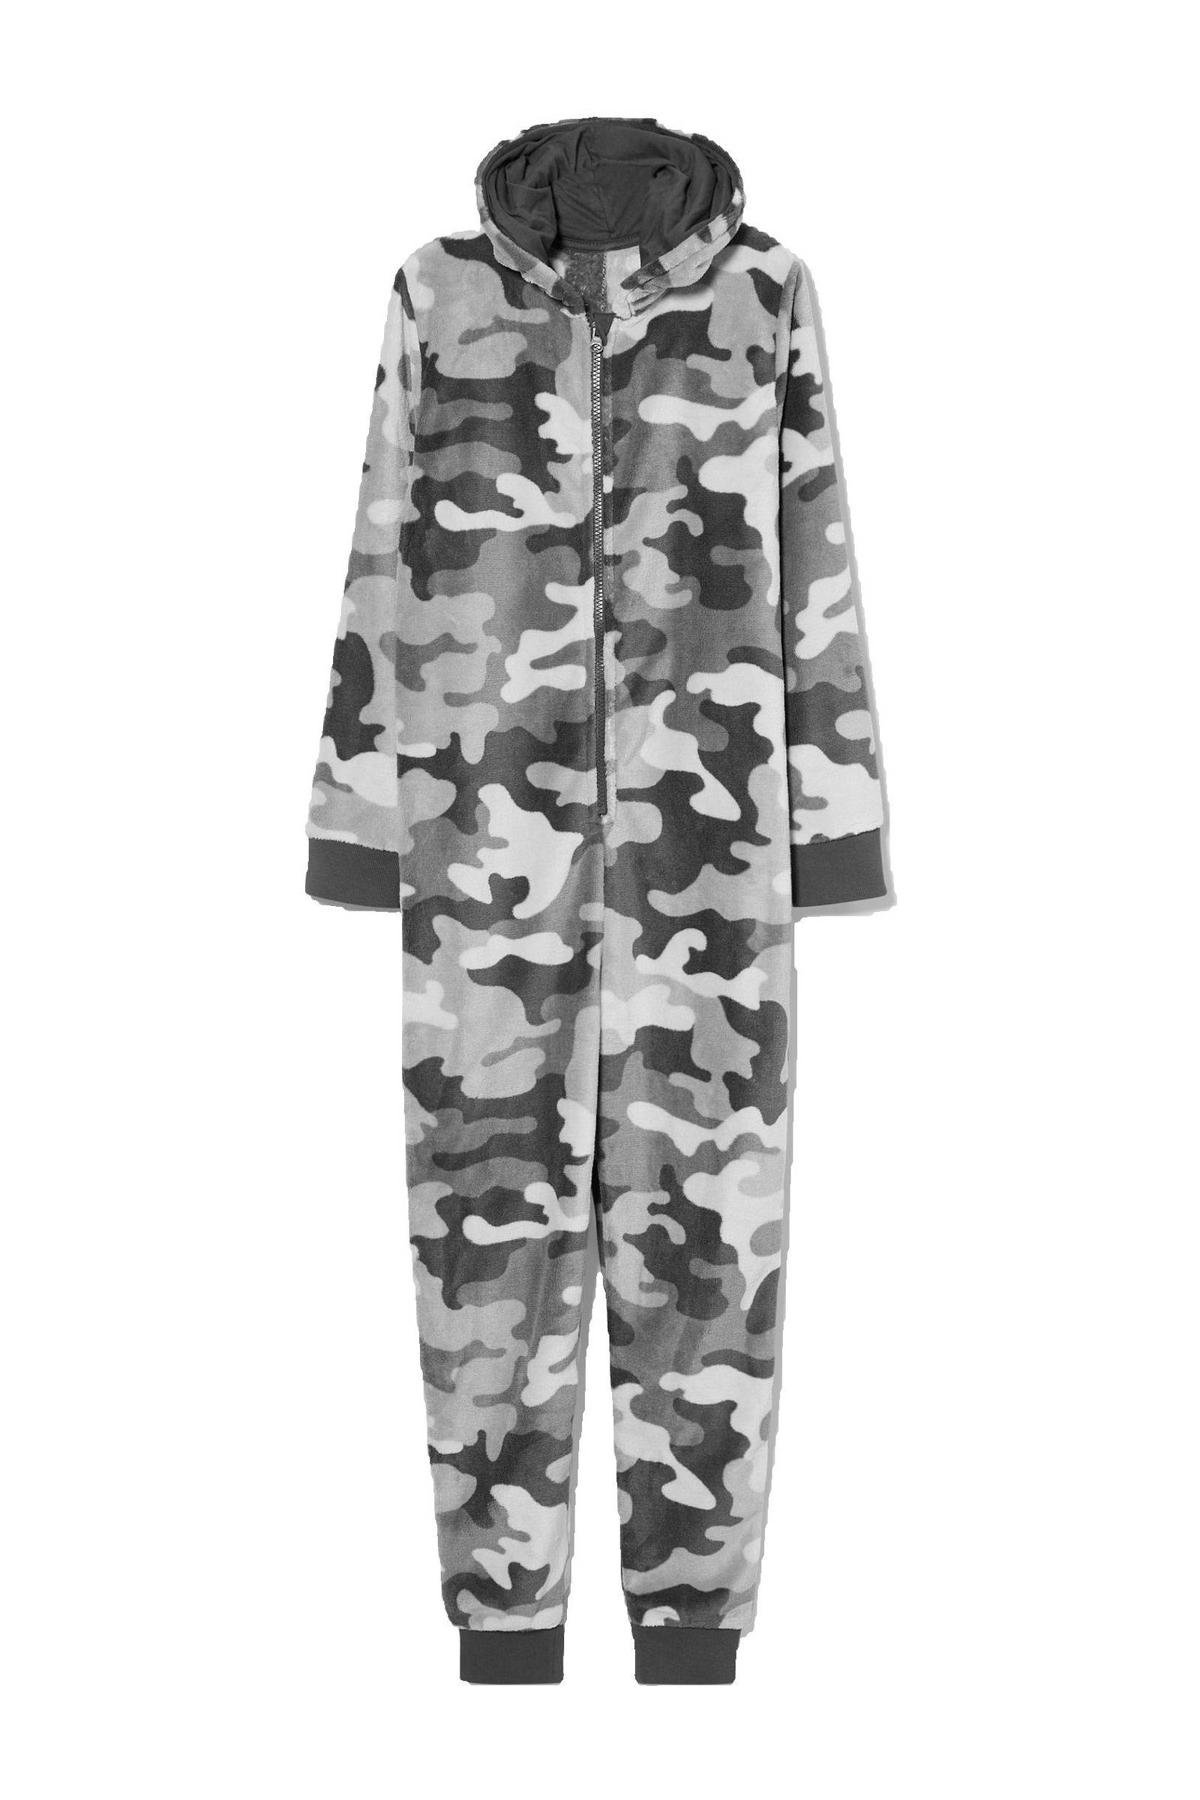 C&A Here There onesie met camouflage print antraciet/lichtgrijs wehkamp